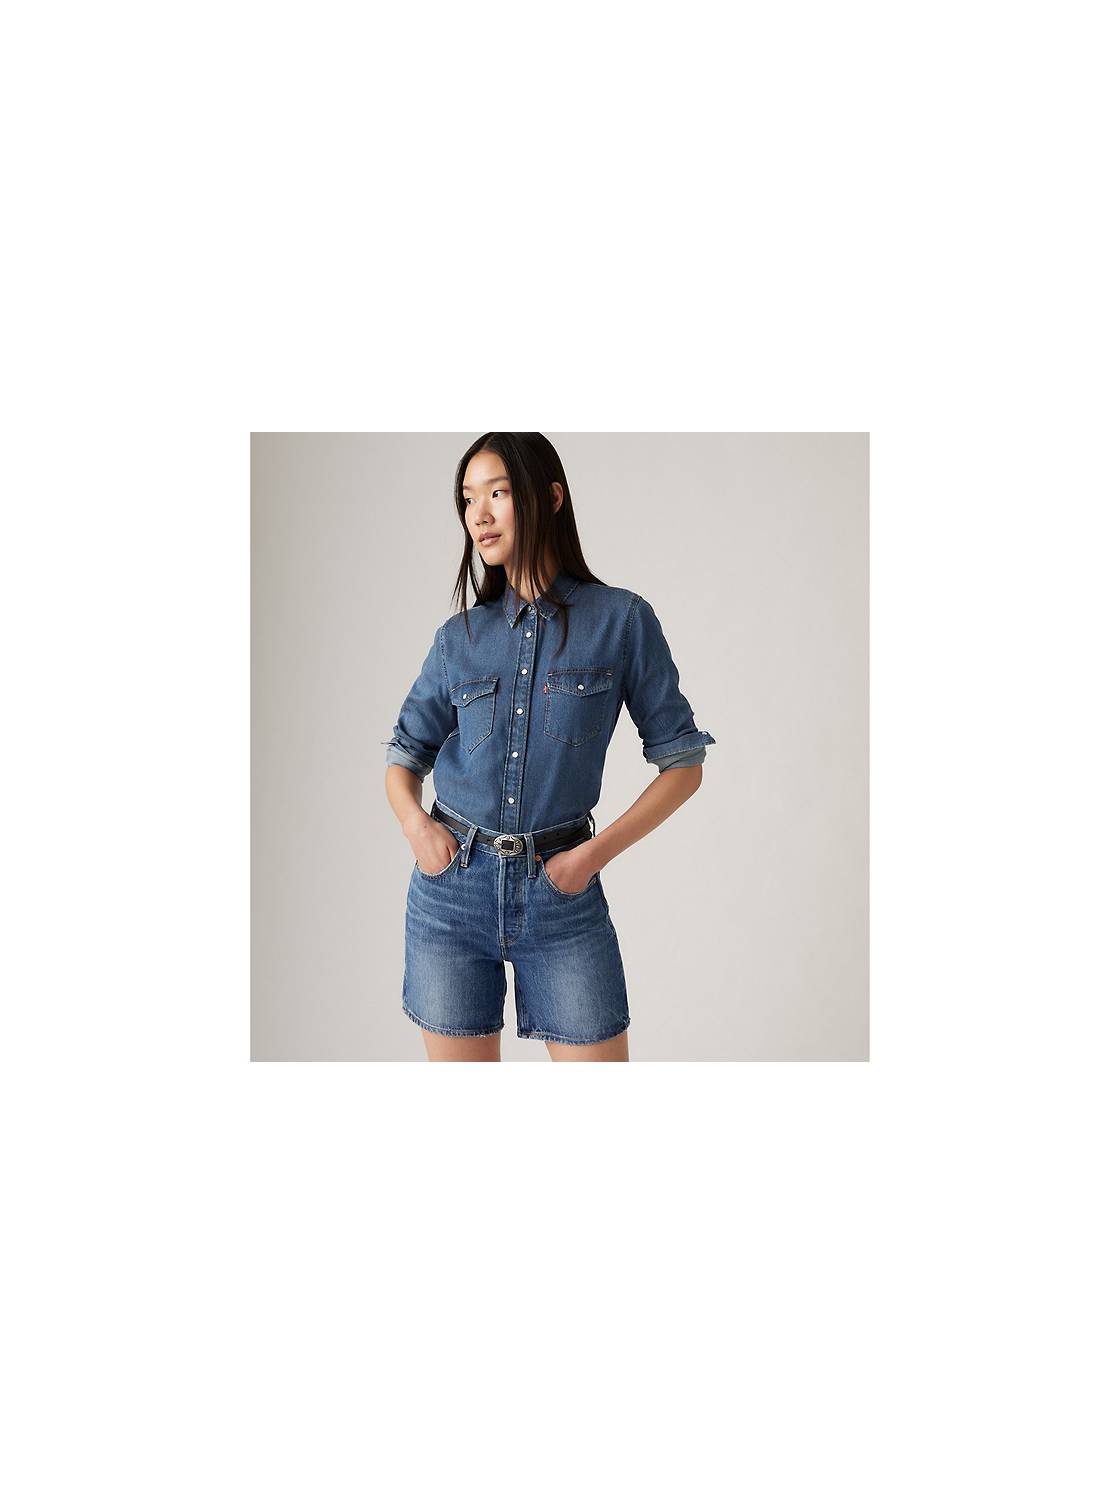 Buy Kcocoo Womens Tops Coat Shirt Sale Long Sleeve Girl Denim